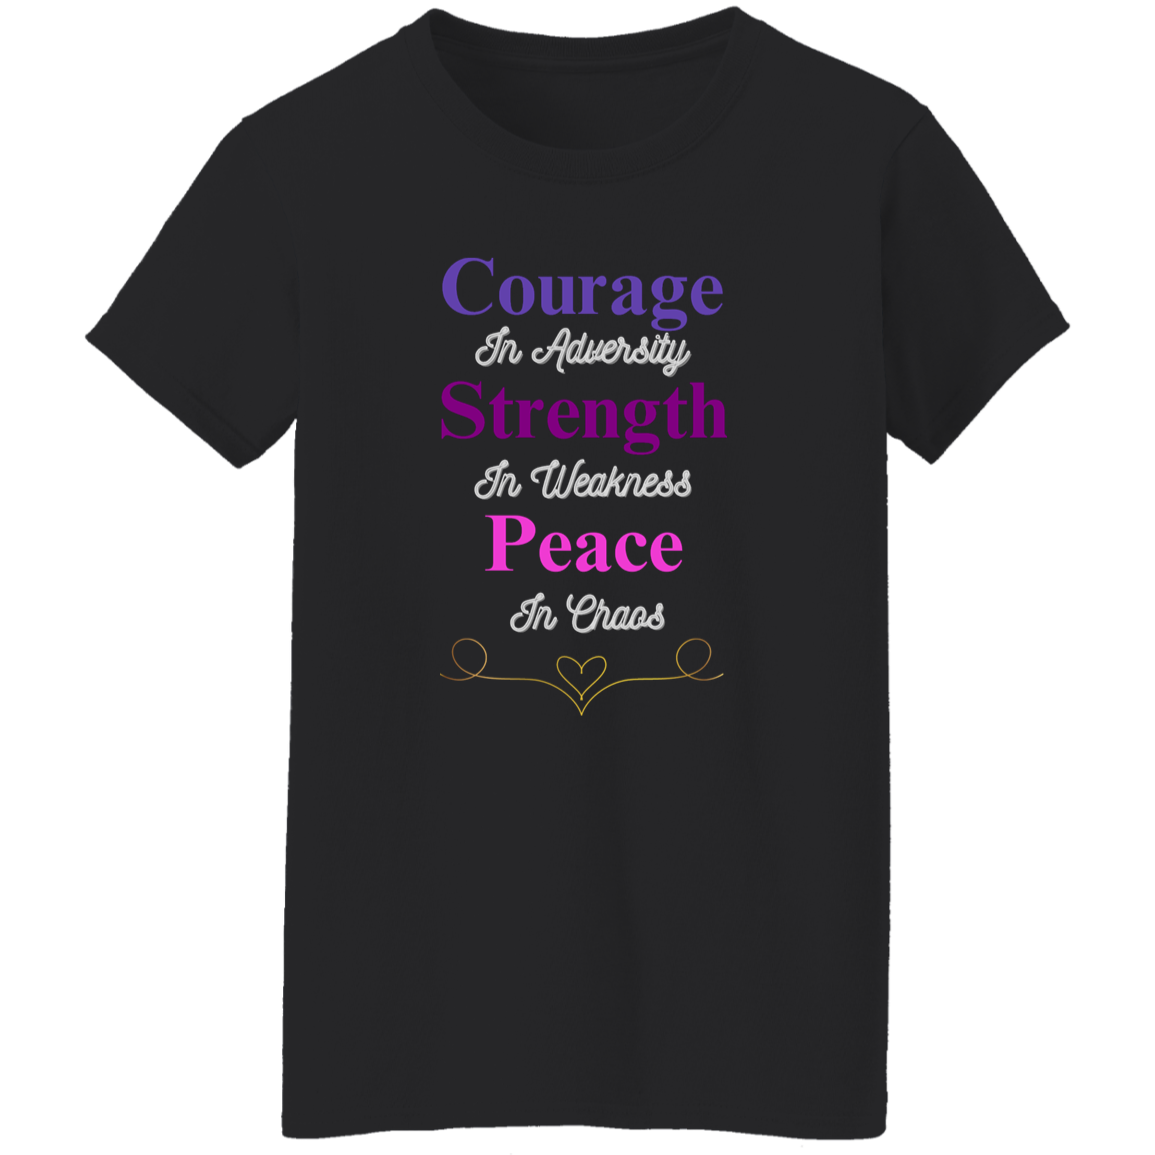 Courage in Adversity Women's T-shirt| Women's Cotton T-Shirt| Short Sleeve